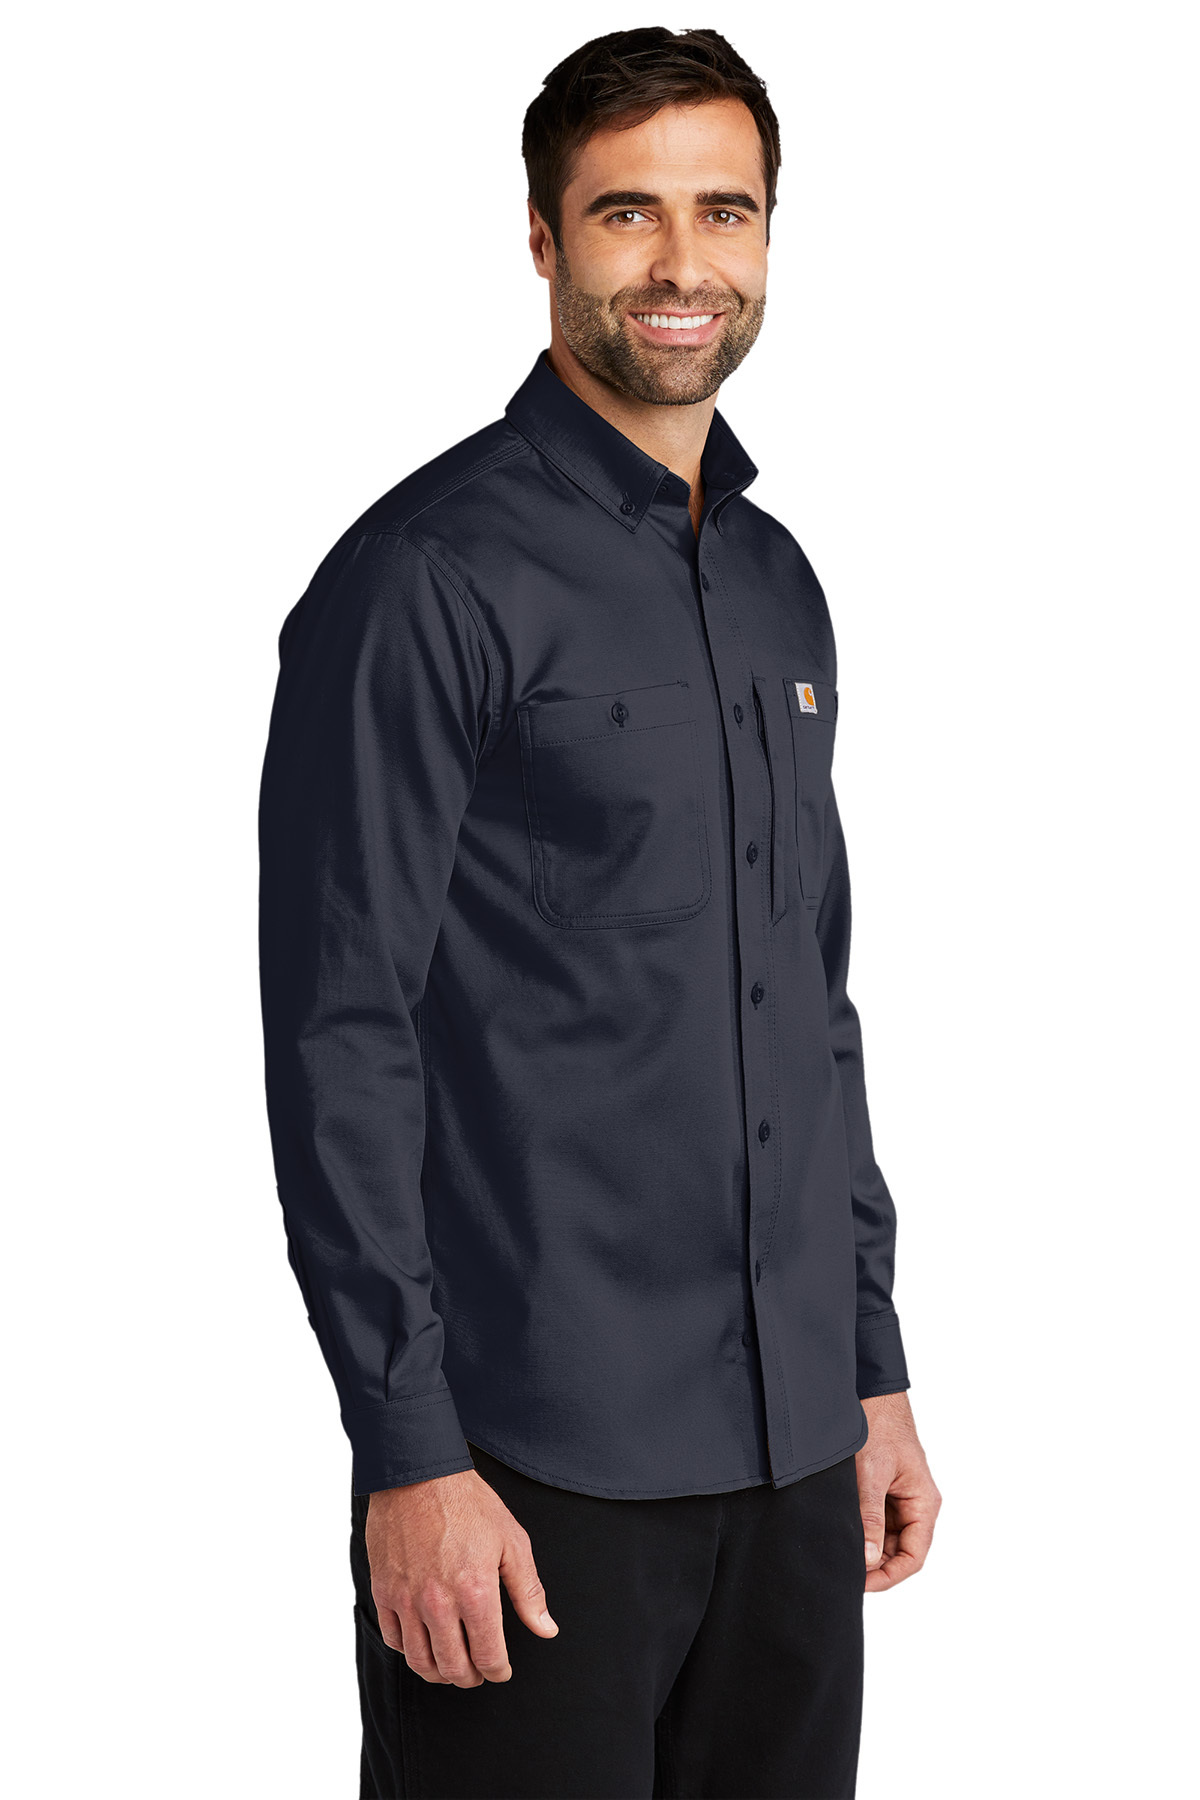 Shirt SanMar | Professional Sleeve | Series Carhartt Rugged Product Long